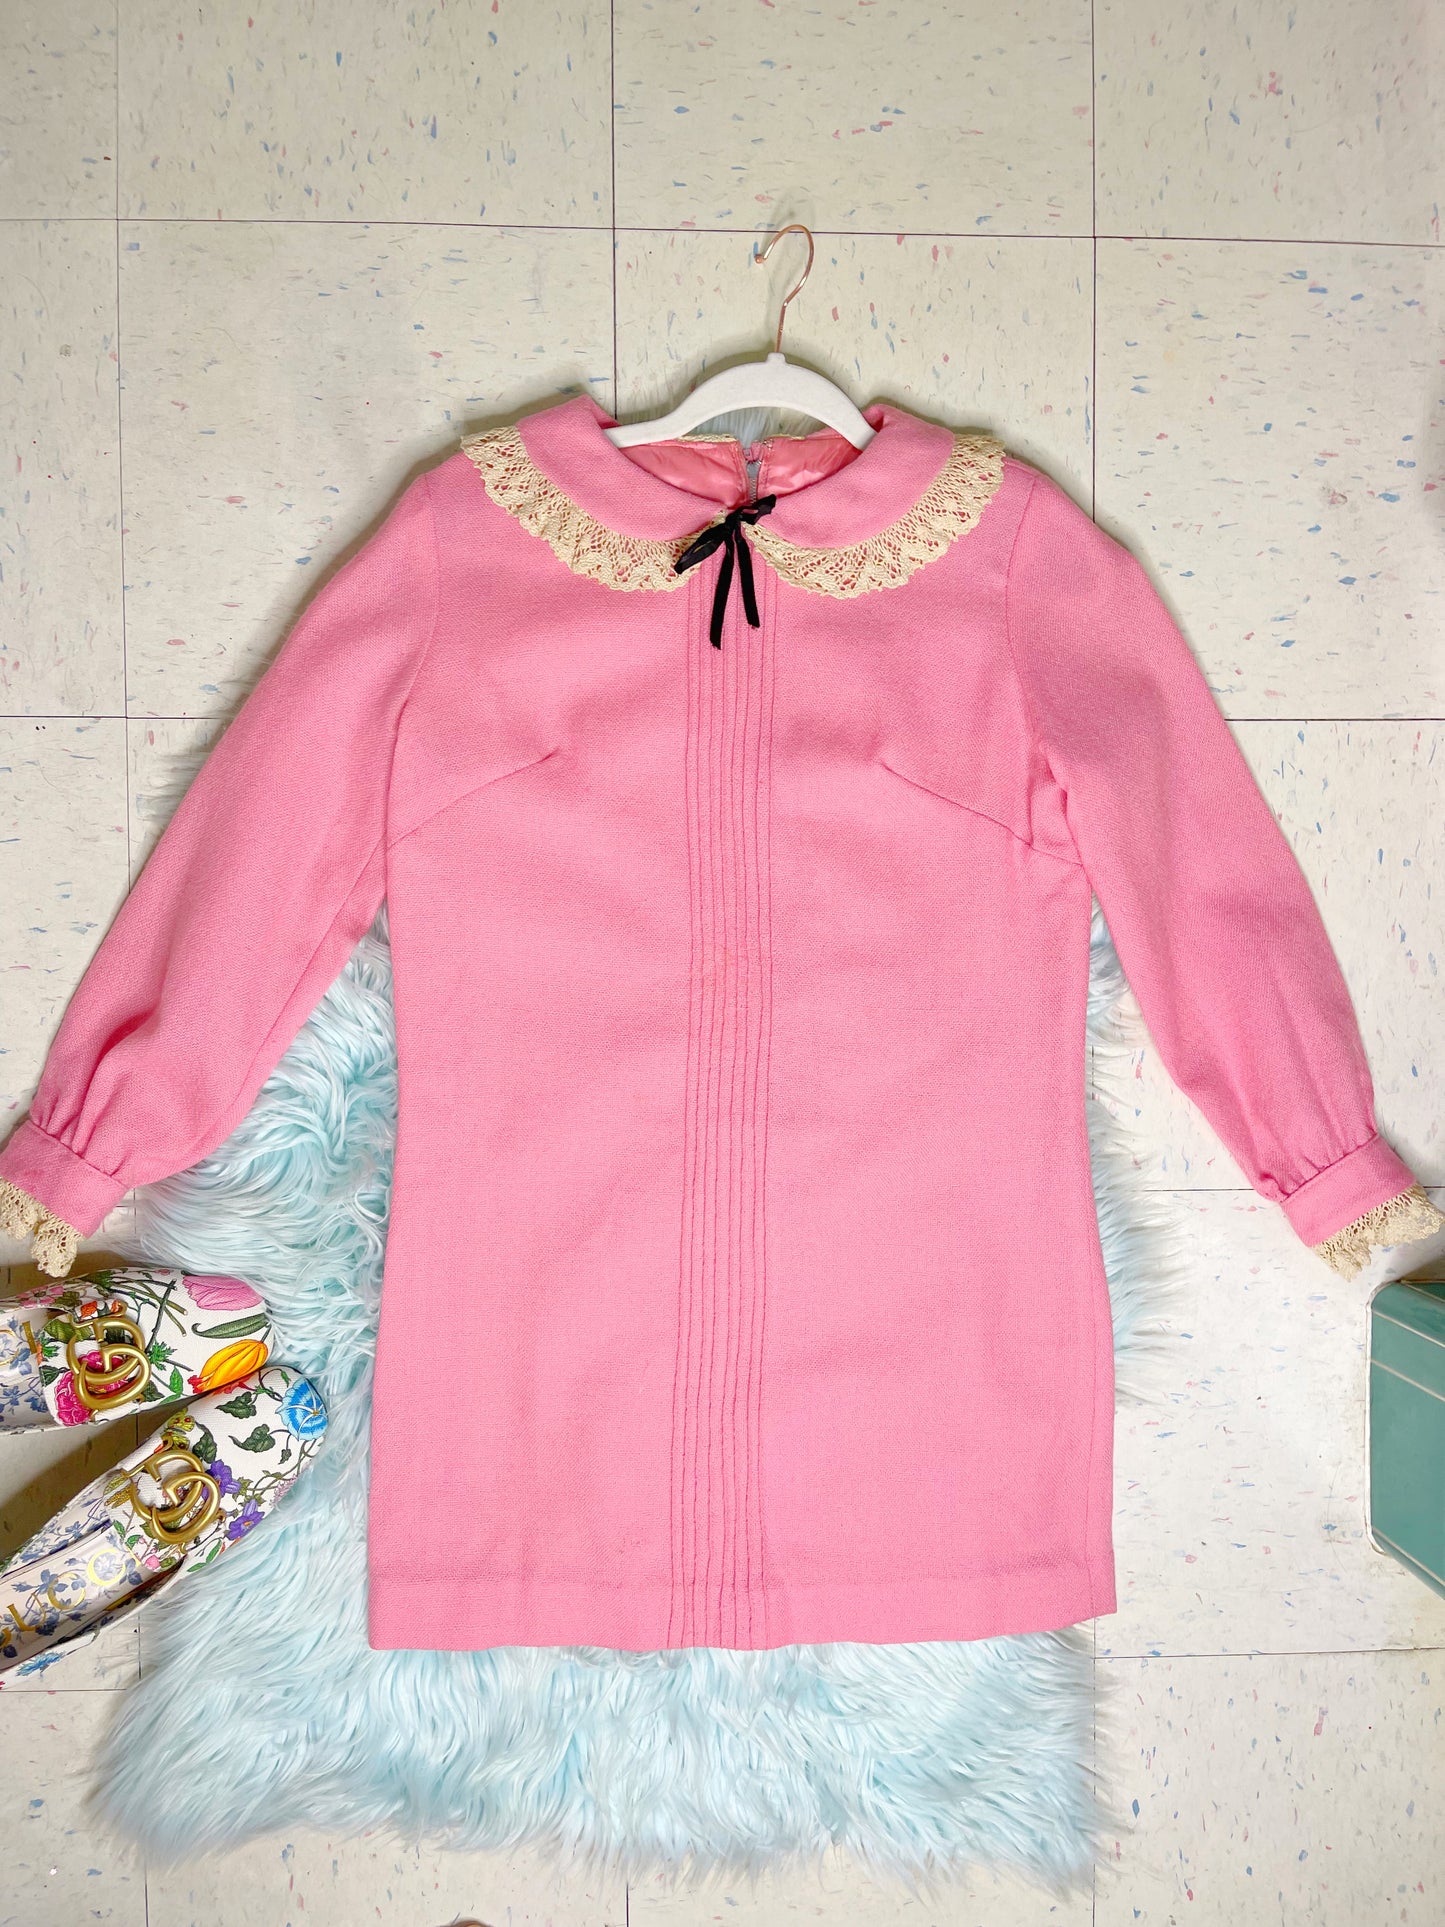 Vintage 60s Bubblegum Pink Mini Dress Fits Sizes XS-SM